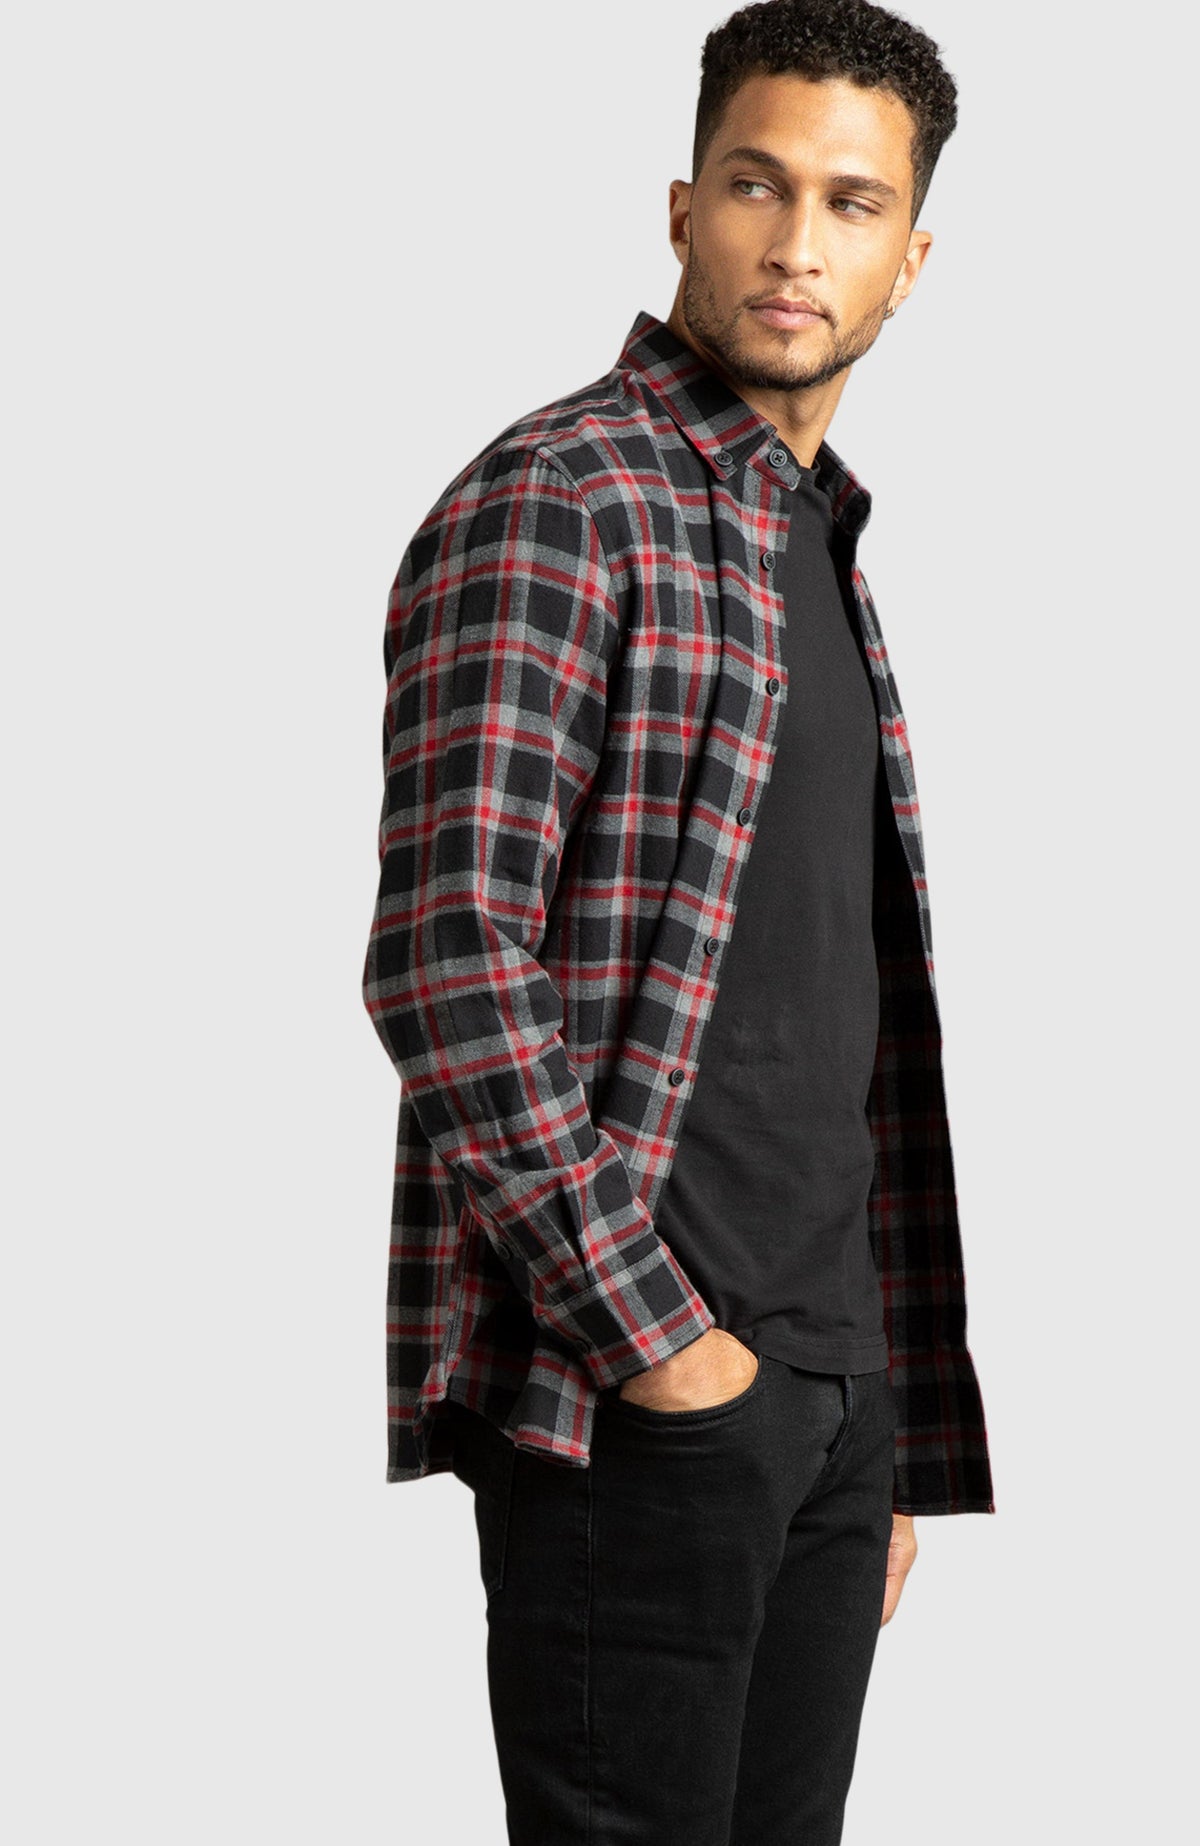 Red & Black Plaid Flannel Shirt for Men